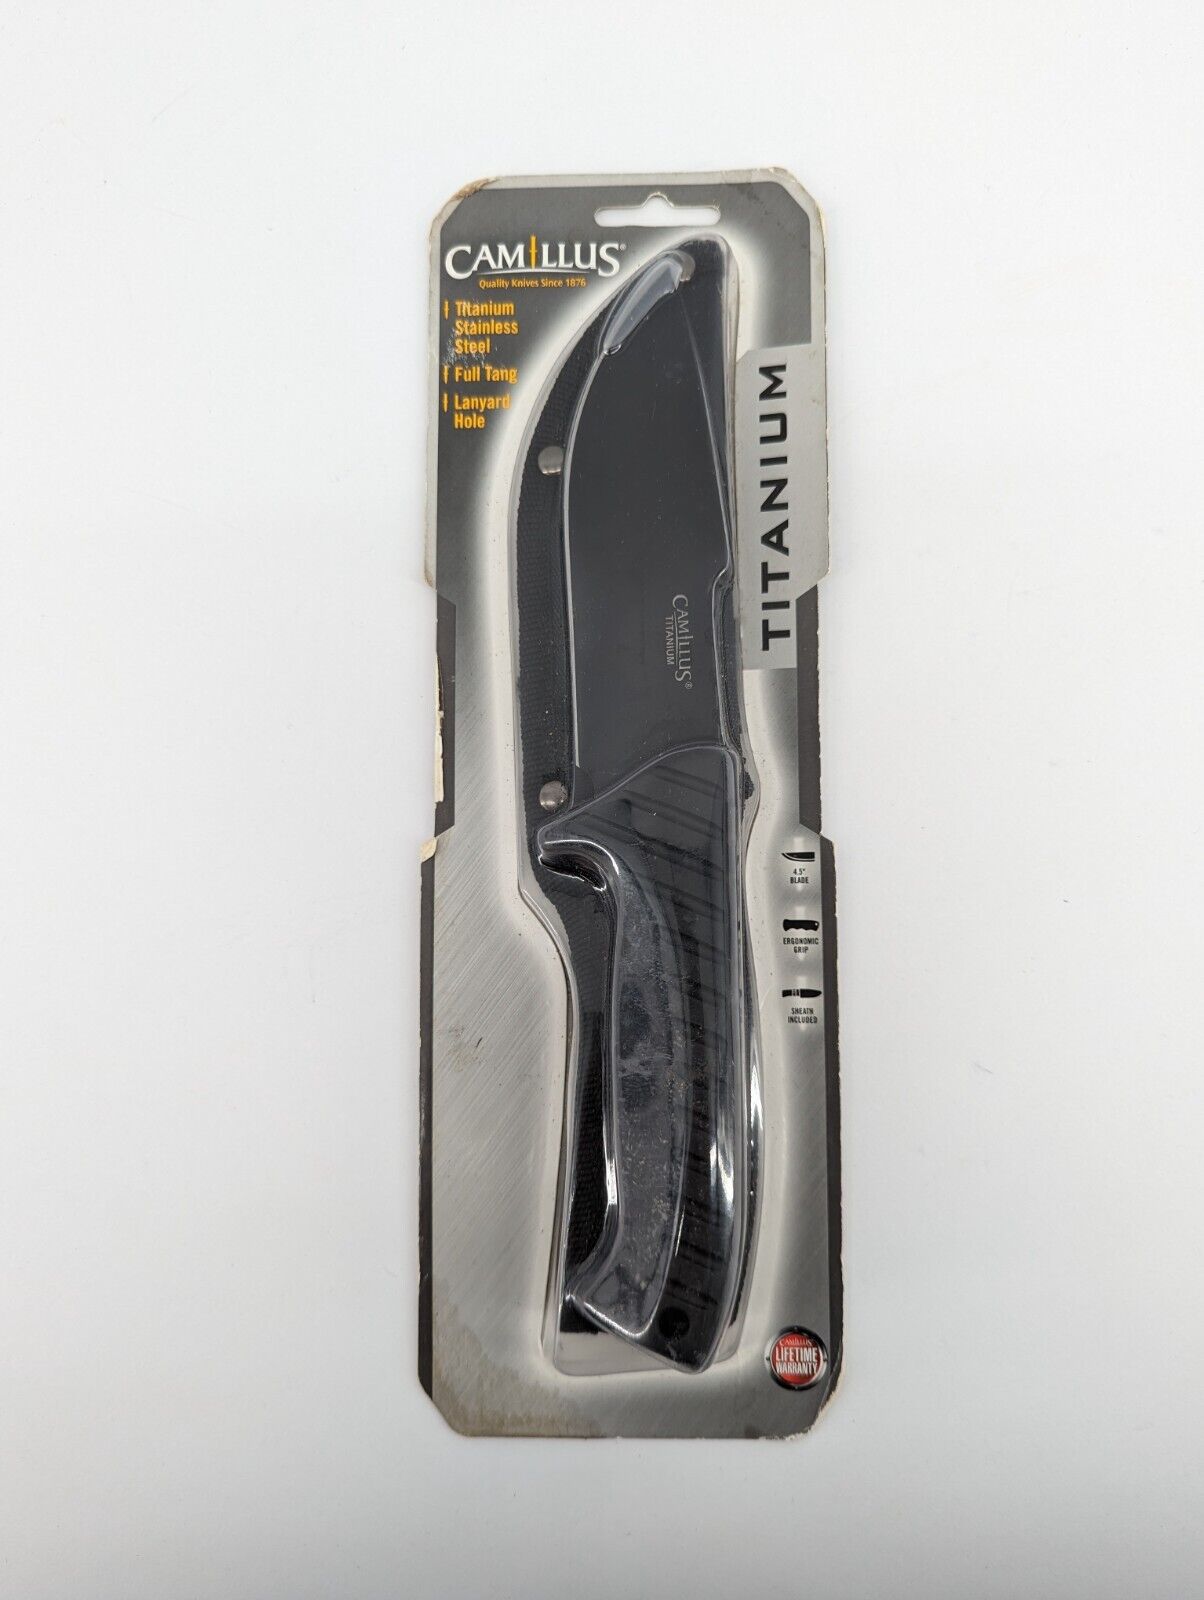 Camillus 19309 Titanium Stainless Steel Full tang knife